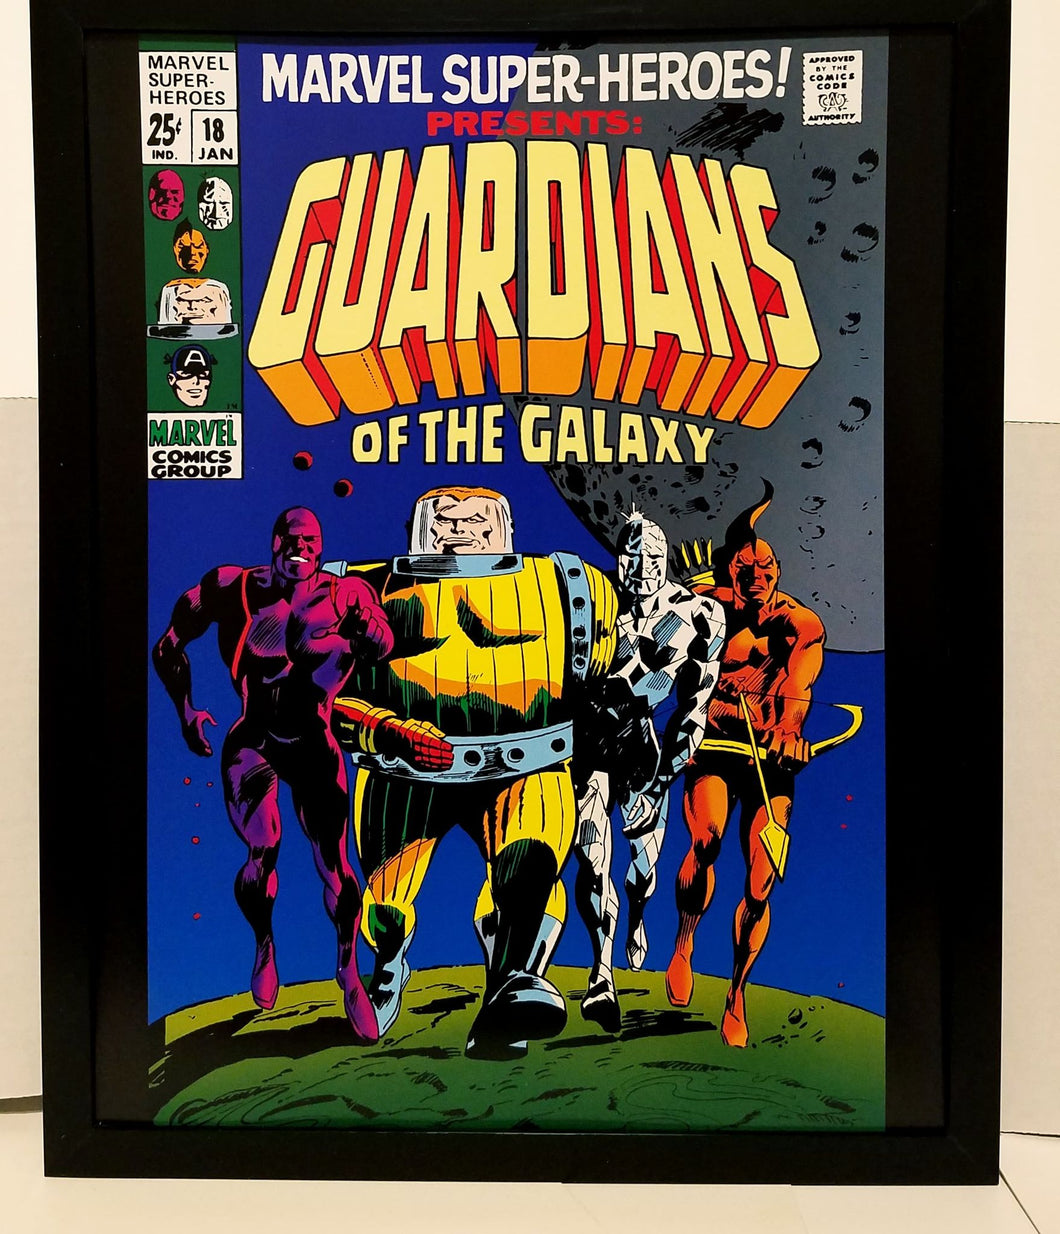 Marvel Super Heroes #18 Guardians Galaxy 11x14 FRAMED Marvel Comics Art Print Poster